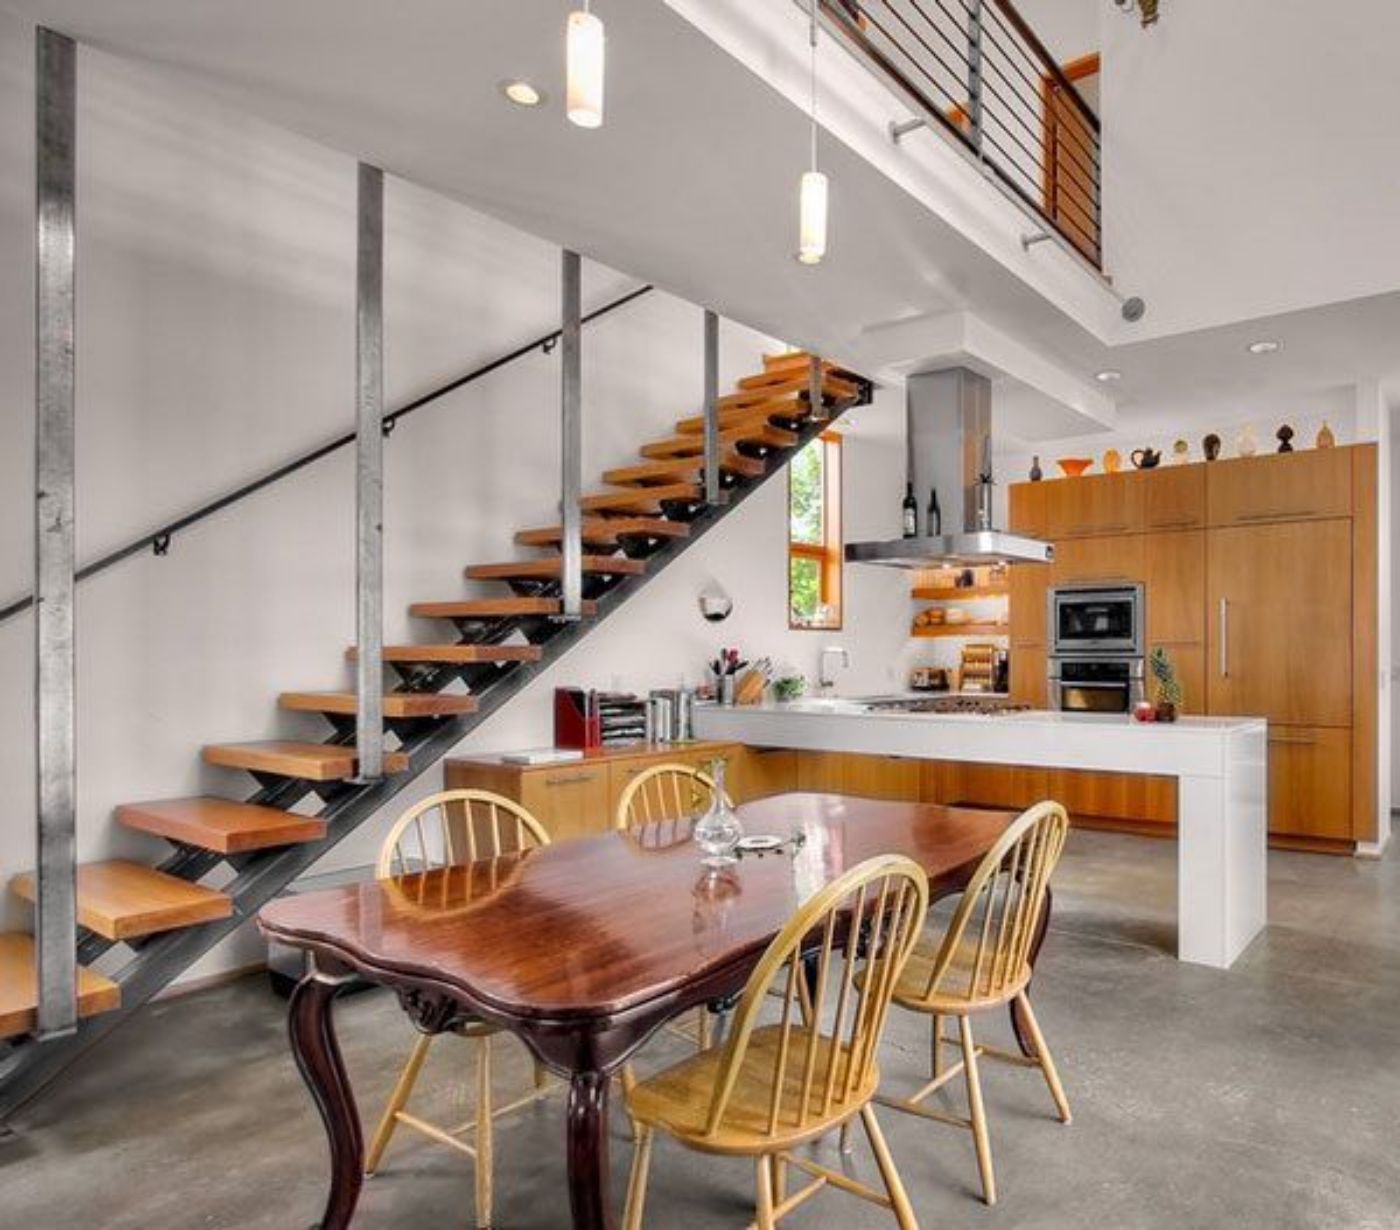 Второй этаж на кухне. Кухня под лестницей. Лестница на кухне. Кухня гостиная с лестницей. Кухня гостиная с лестницей в стиле лофт.